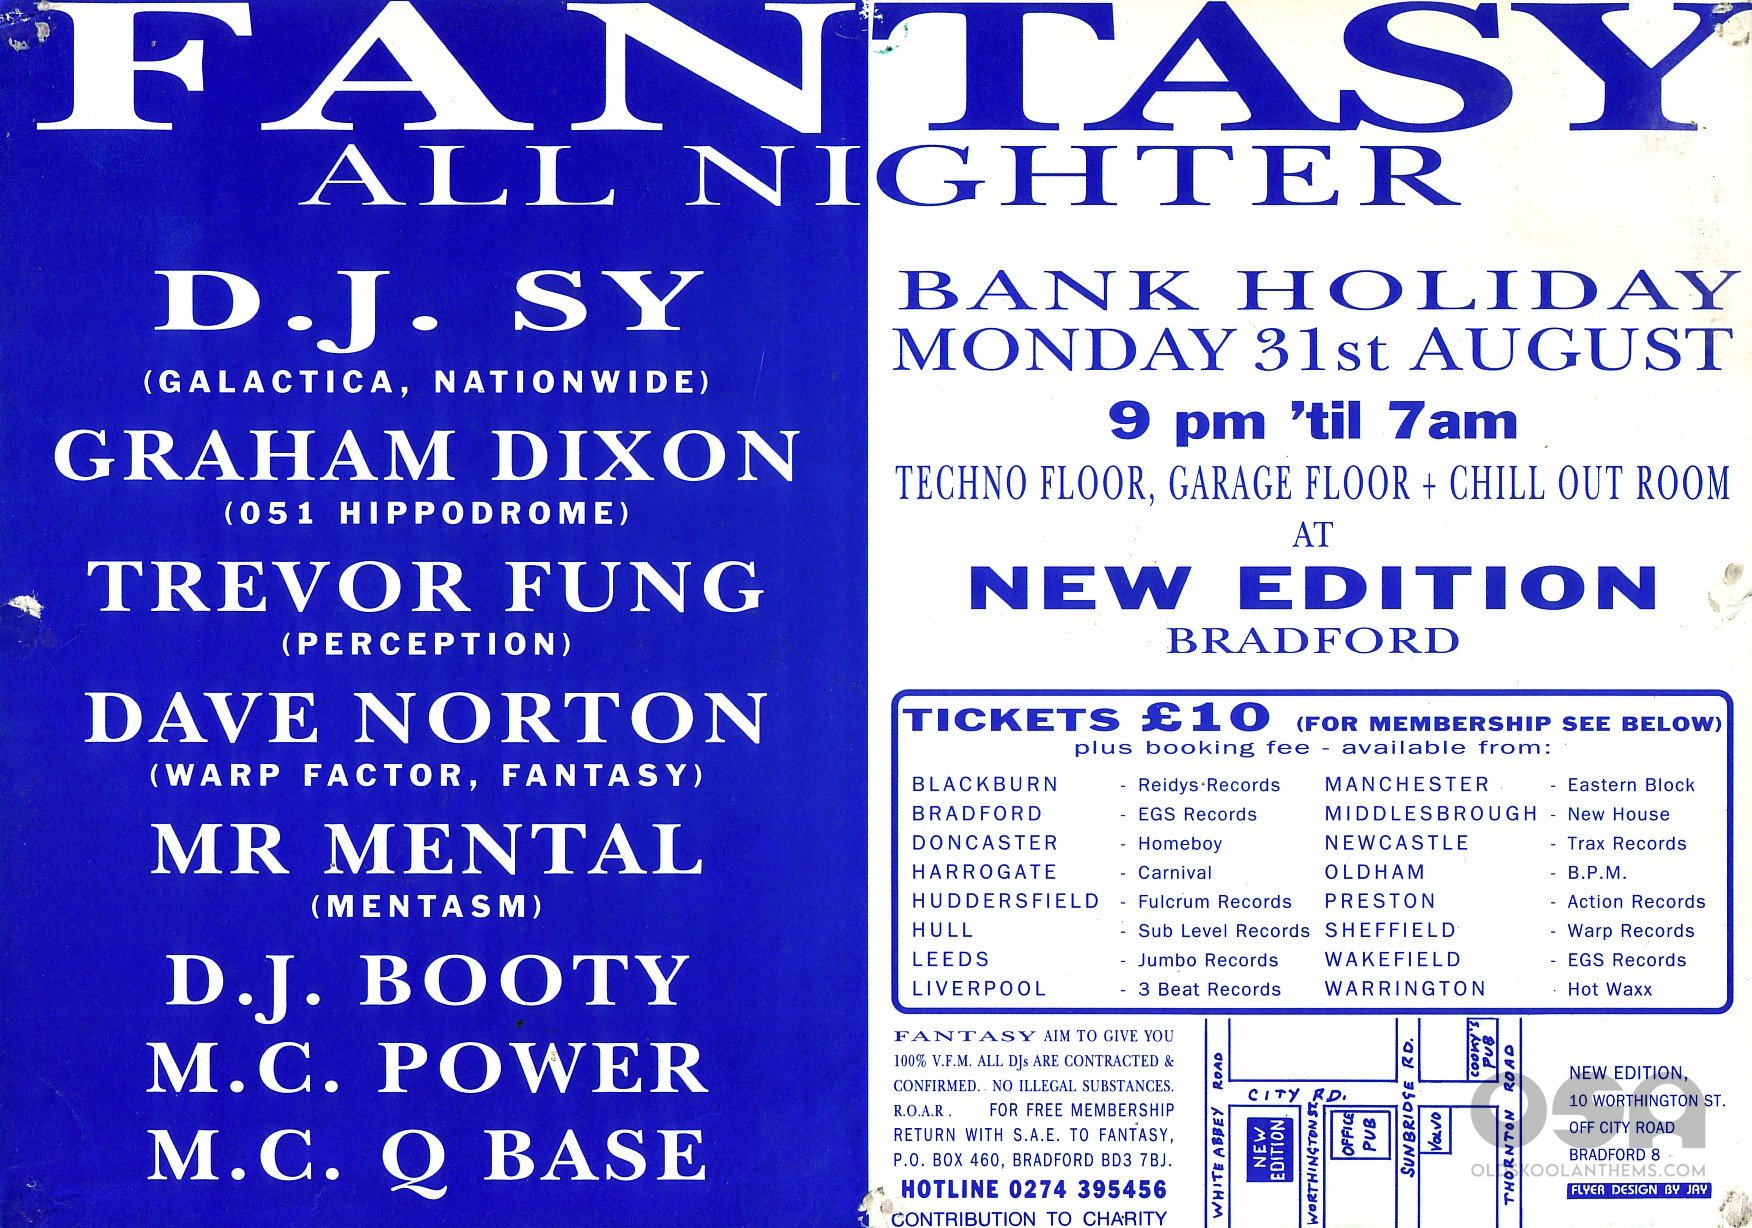 1_Fantasy_All_Nighter_Bank_Hol_Mon_31st_Aug_1992___New_Edition_Bradford_rear_view.jpg